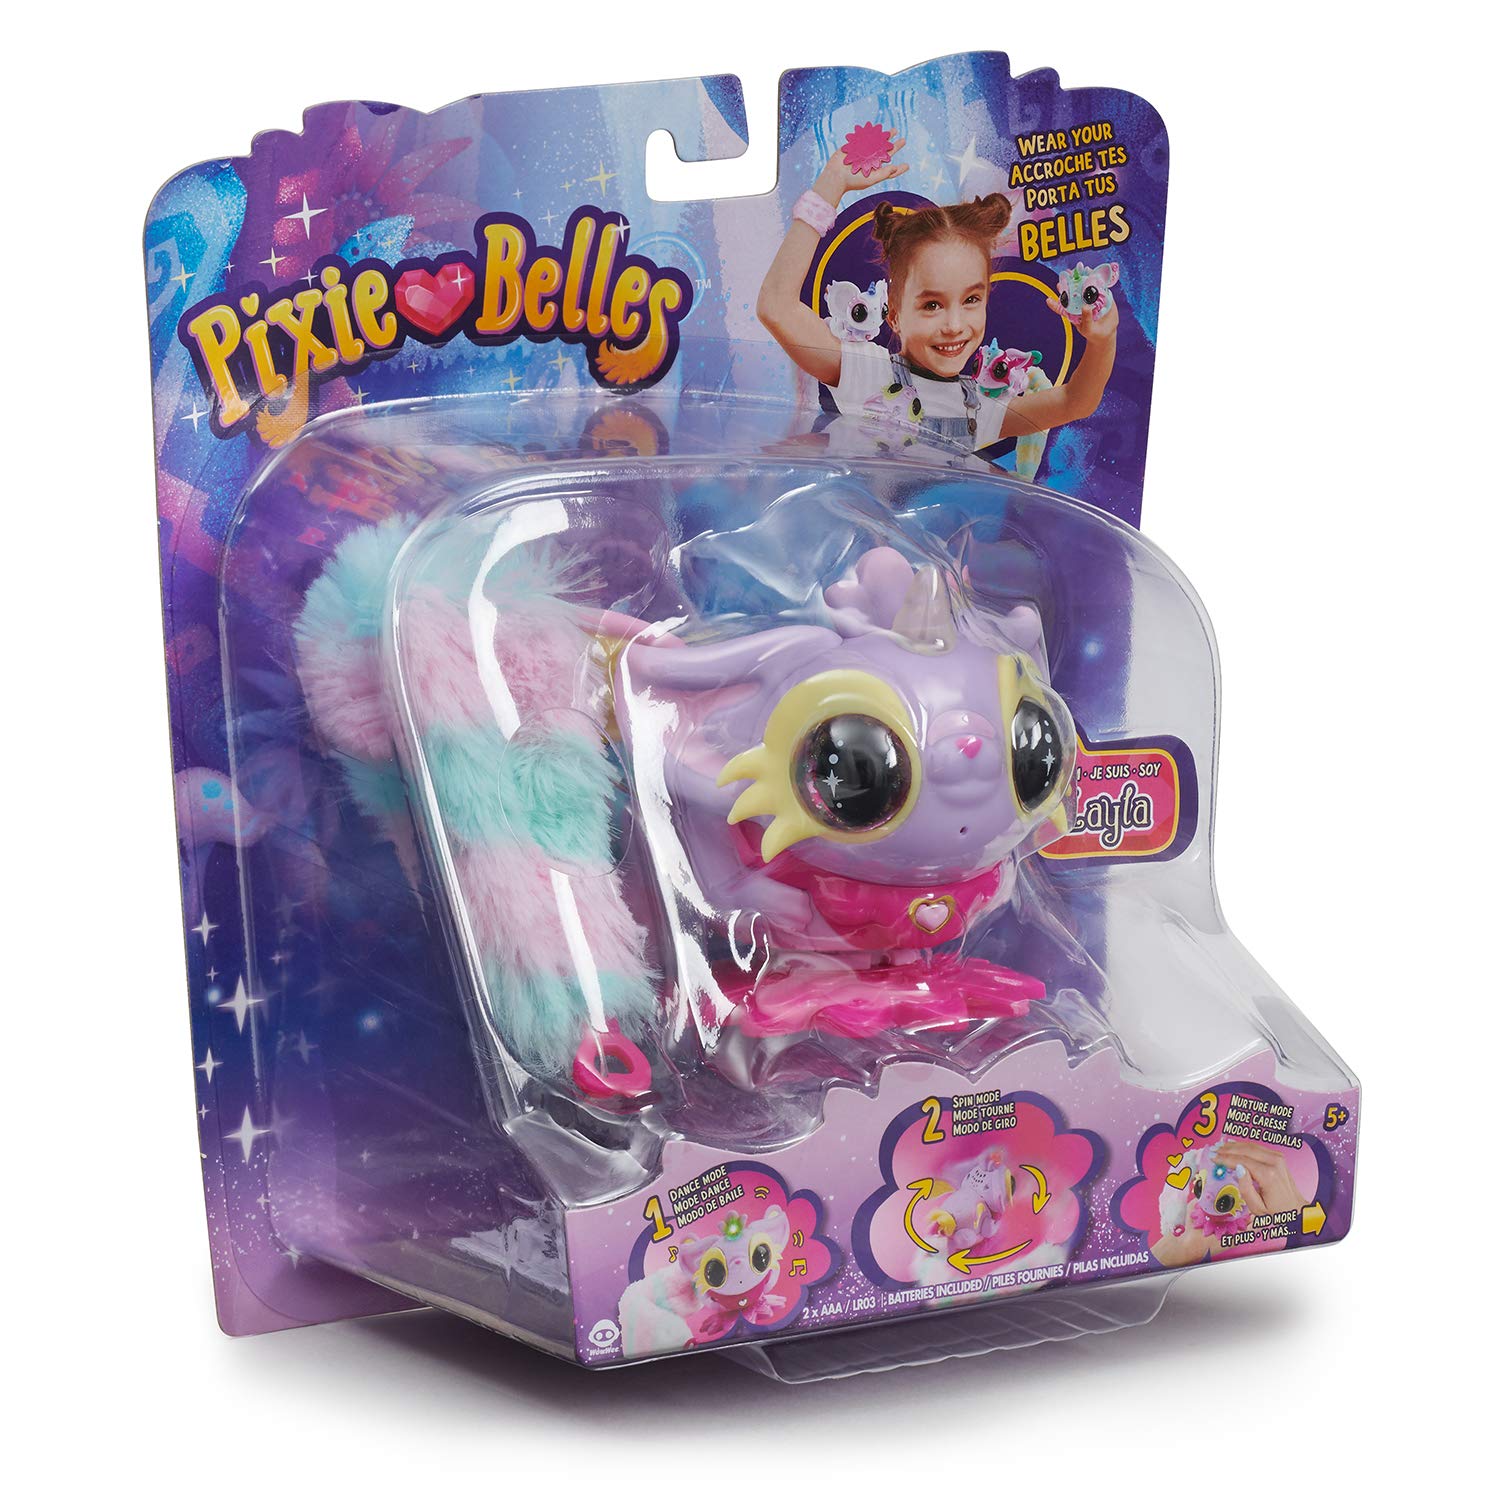 Pixie Belles - Interactive Enchanted Animal Toy, Layla (Purple)